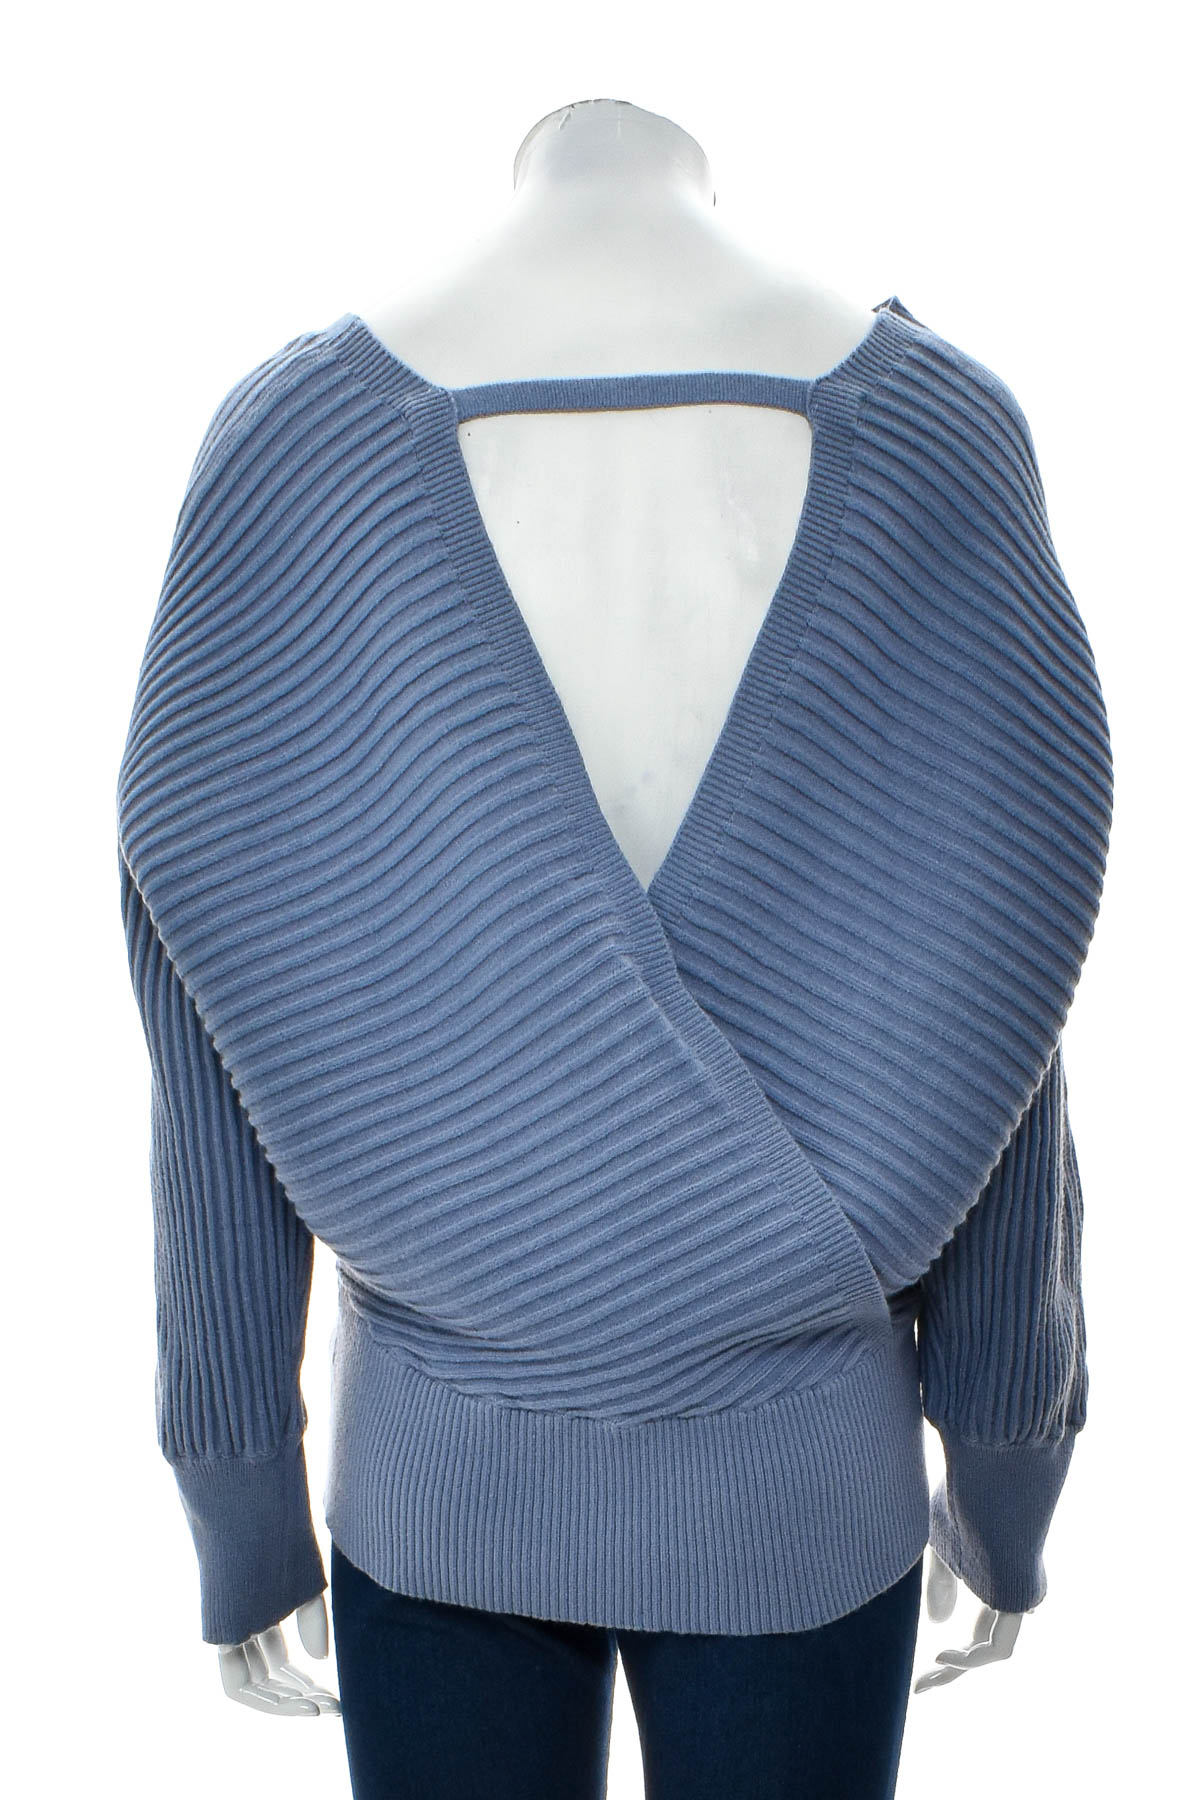 Women's sweater - Lascana - 1